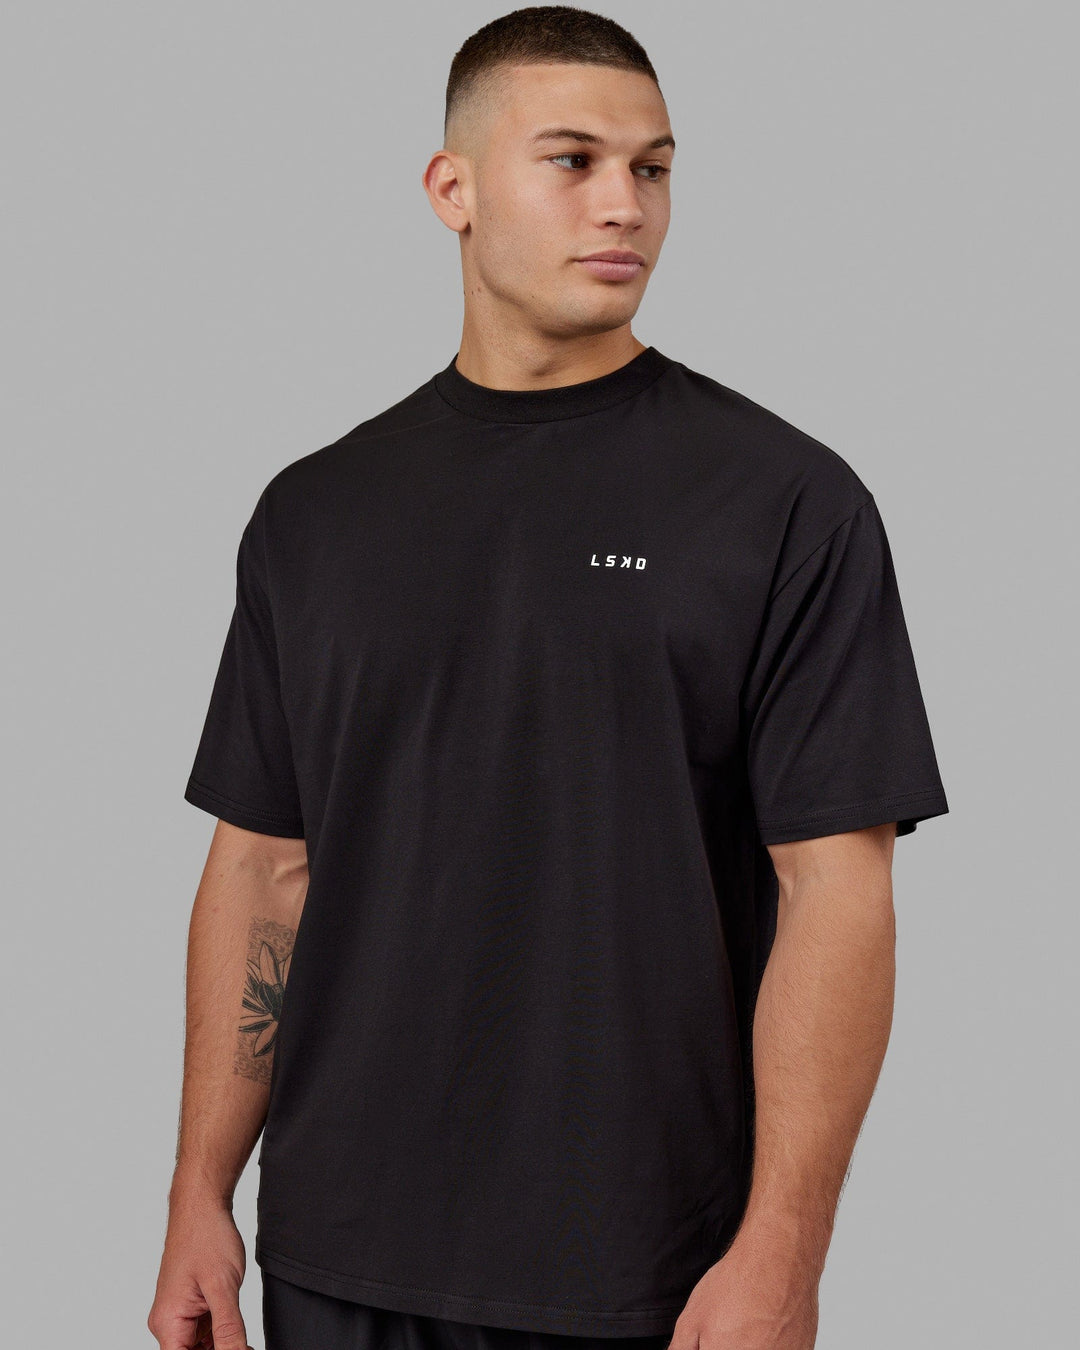 Man wearing Unisex VS5 FLXCotton Tee Oversize - Black-White